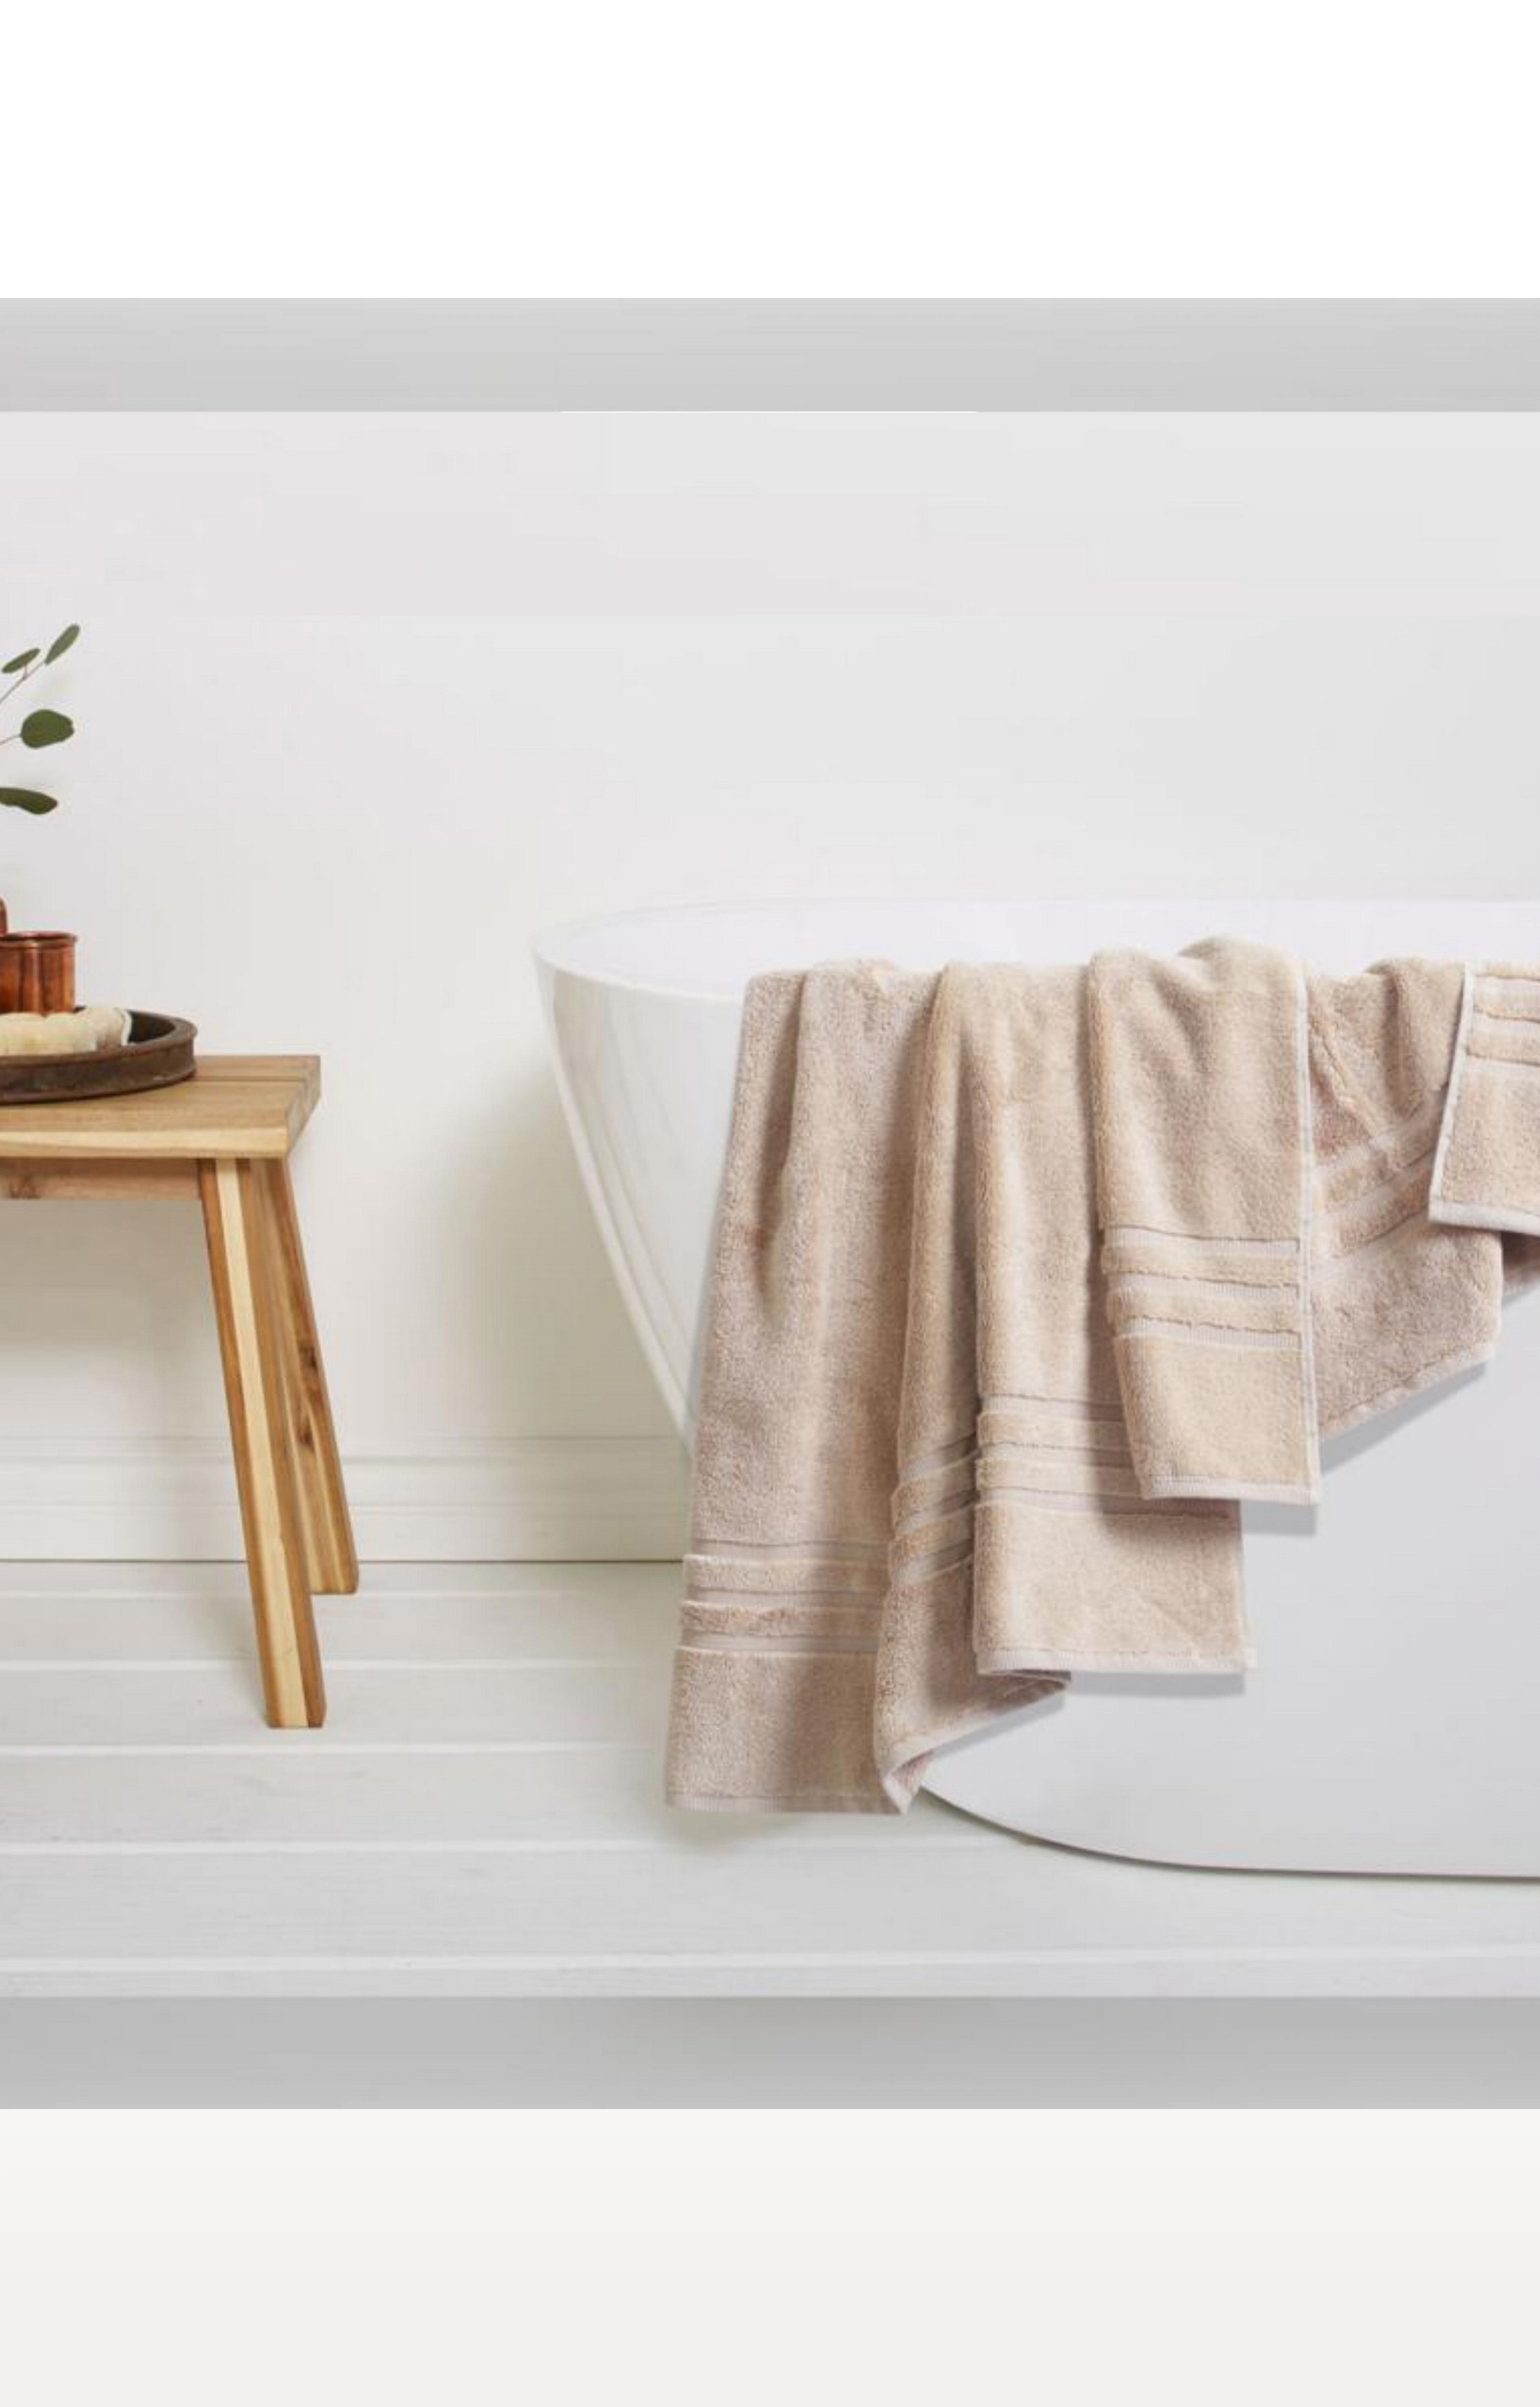 Sita Fabrics | Sita Fabrics Premium Cotton Super Soft Zero Twist Yarn Very Airy 600 GSM Bath Towel - Beige